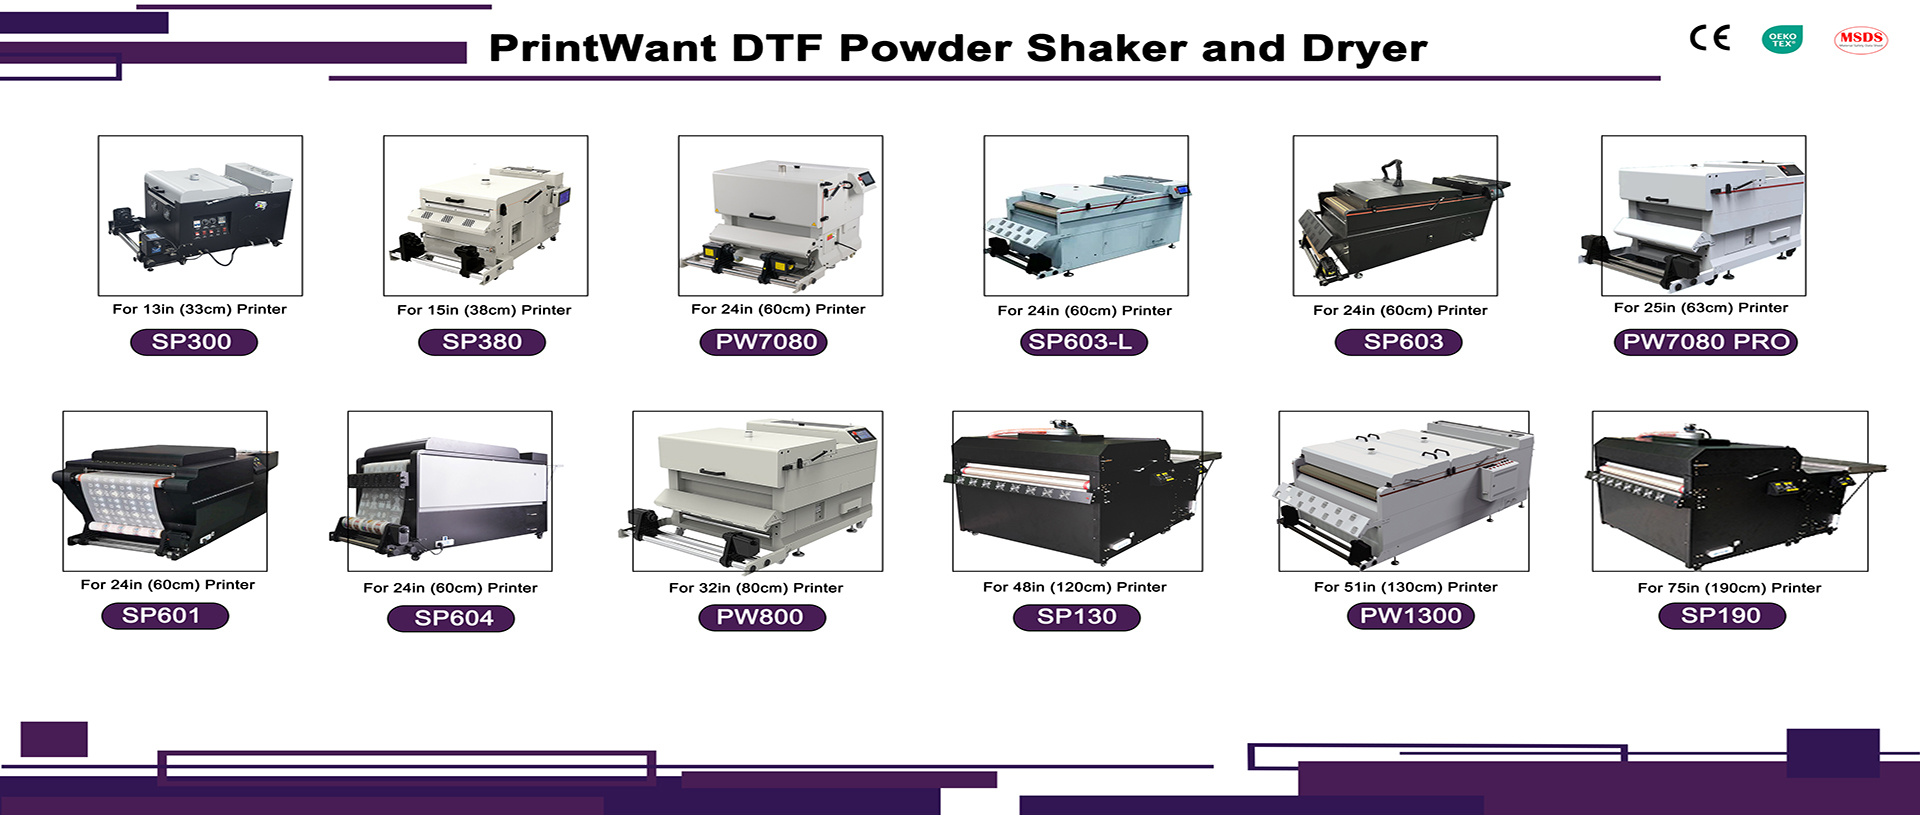 DTF Powder Shaker